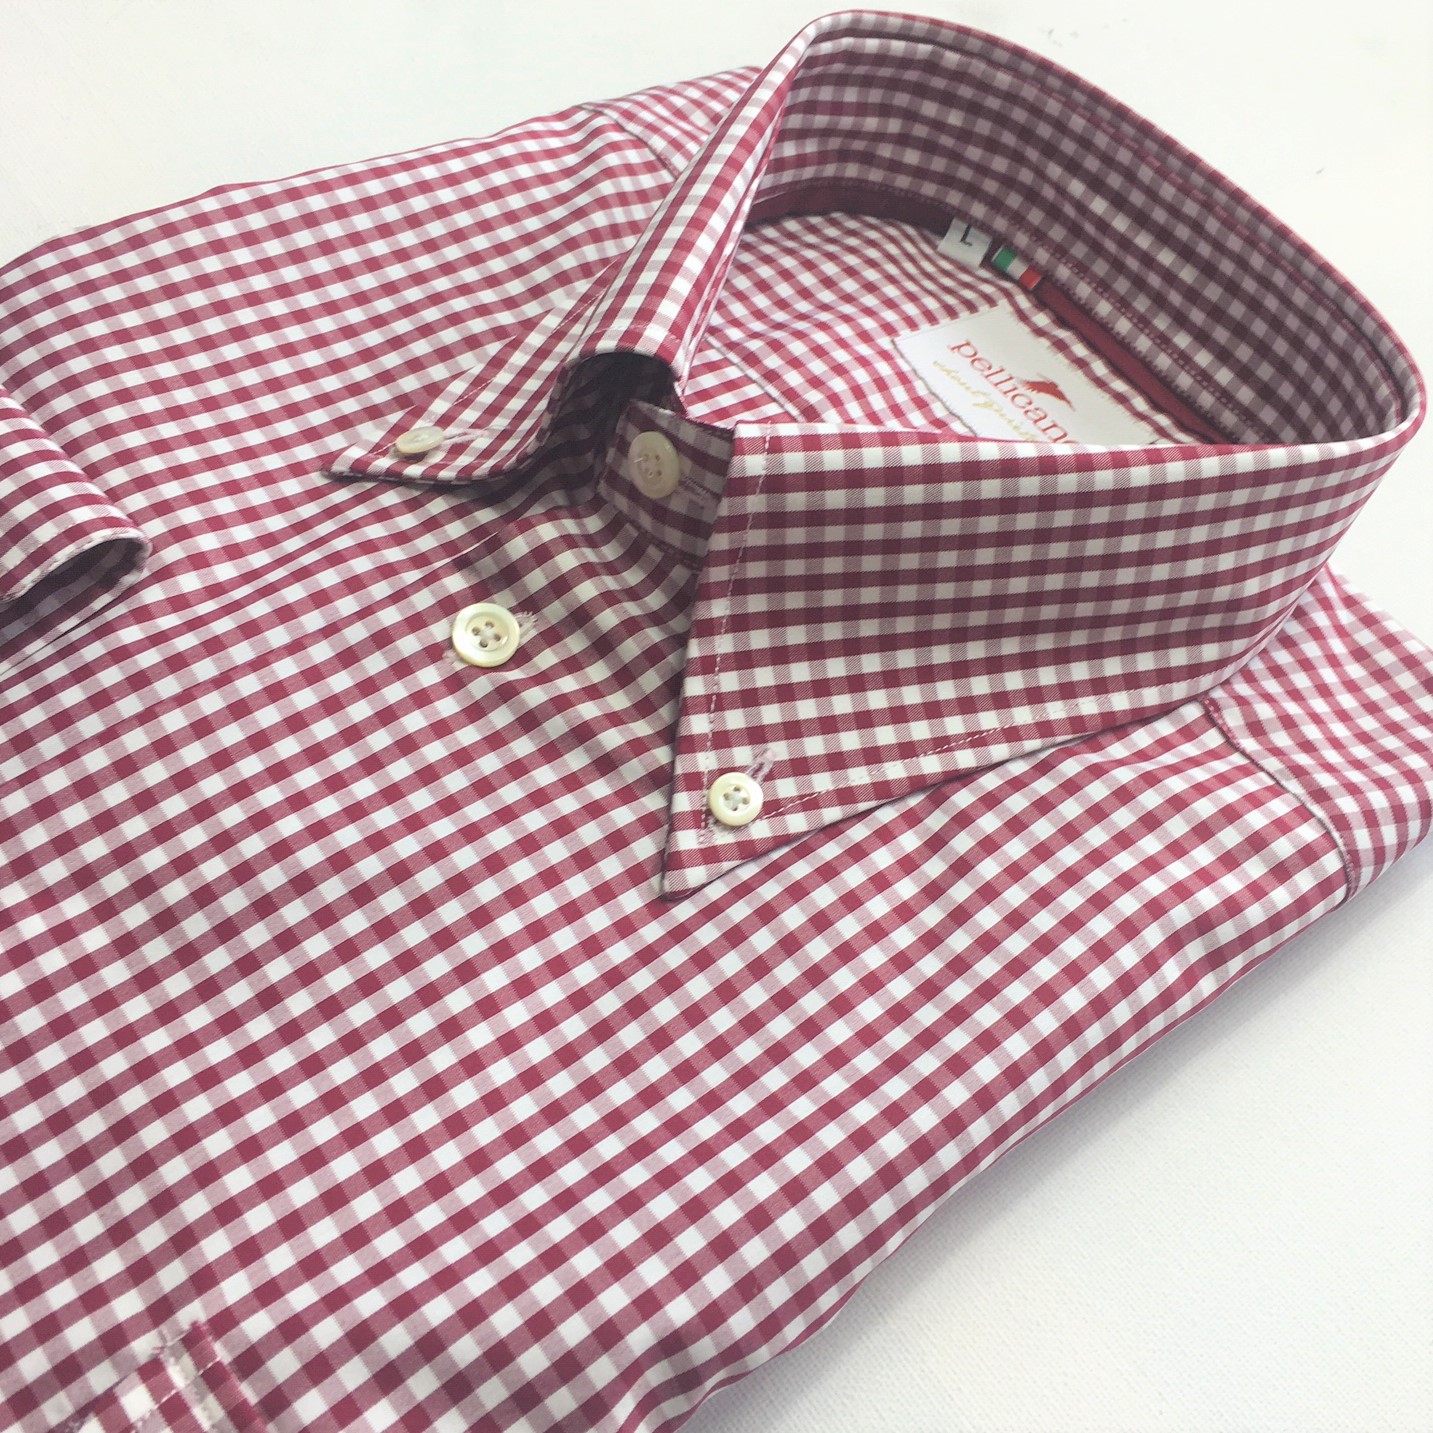 Men's Gingham Shirt in Burgundy & White - Pellicano Menswear